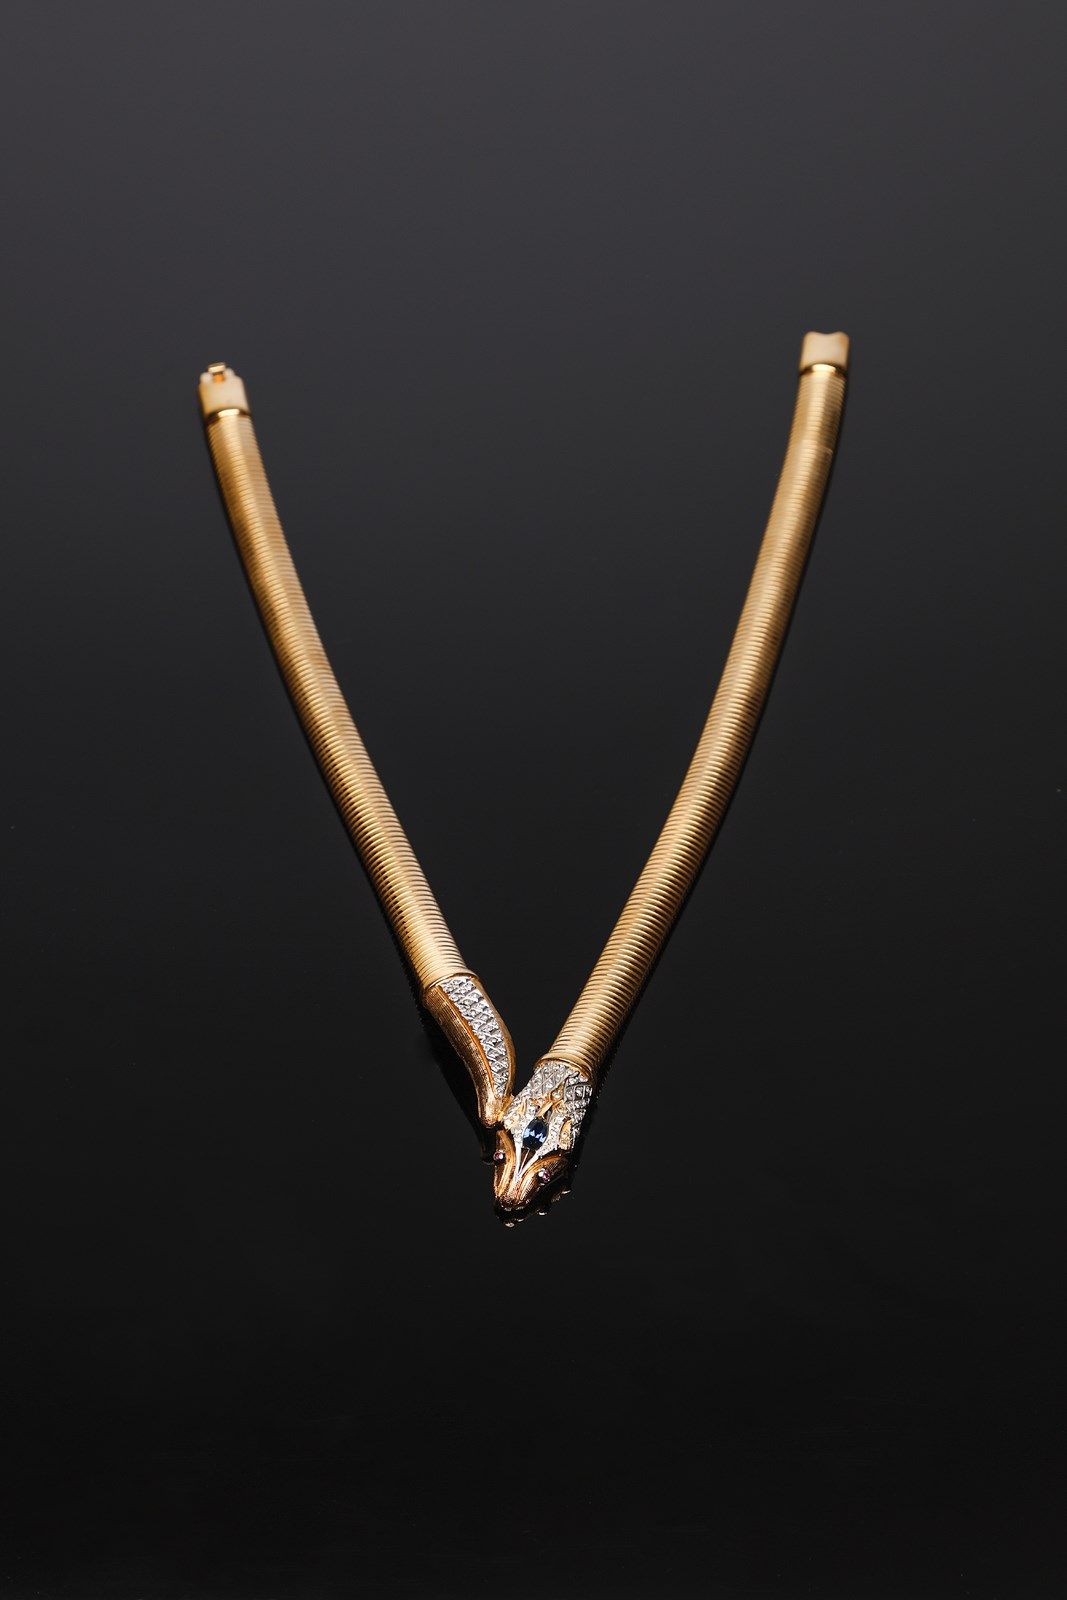 PIERRE CARDIN Snake necklace, tubogas mesh in golden metal and rhinestones. Schl&hellip;